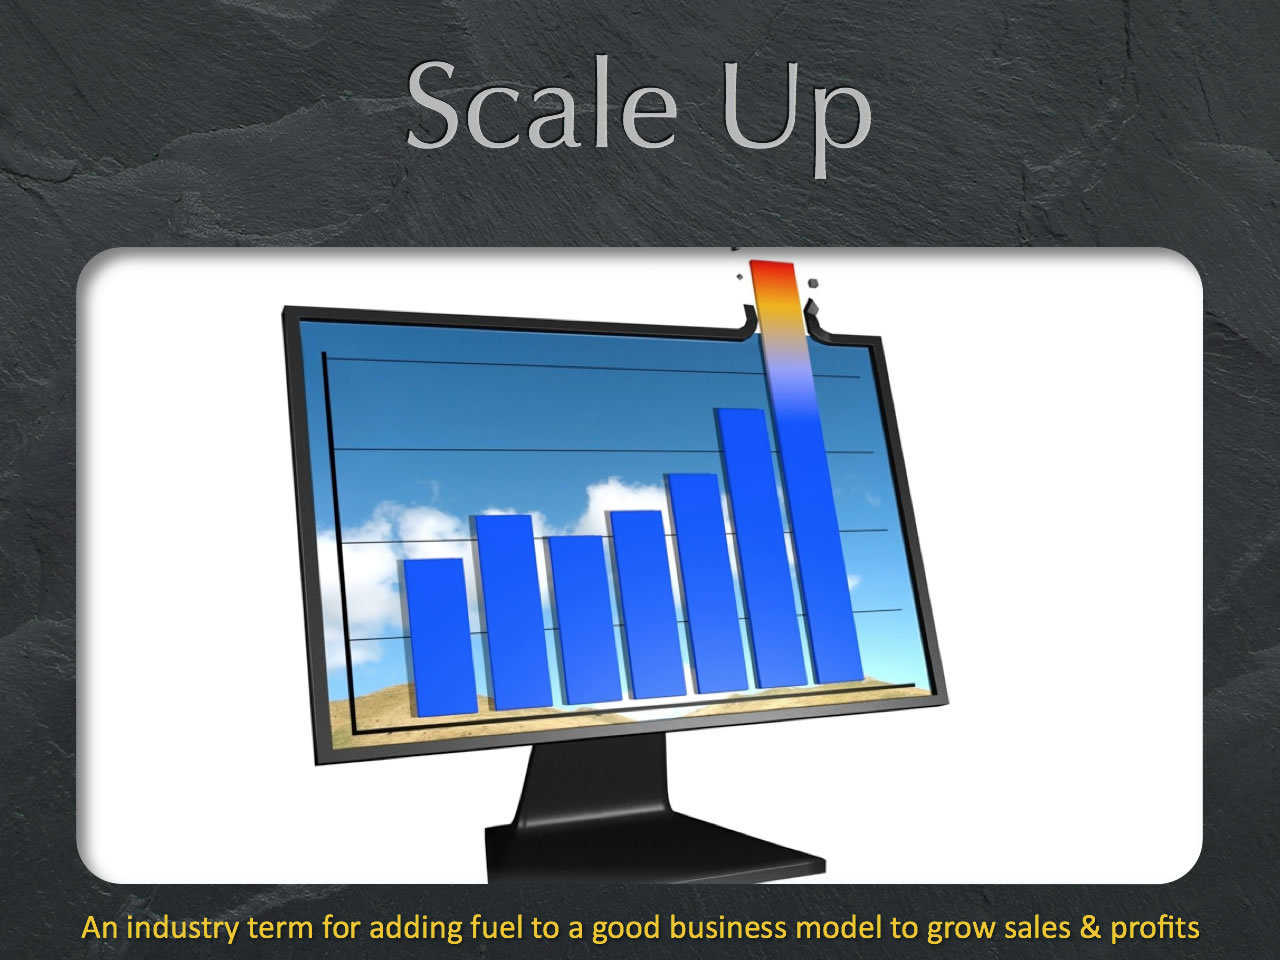 Scale up financial publishing revenue and profit ASAP